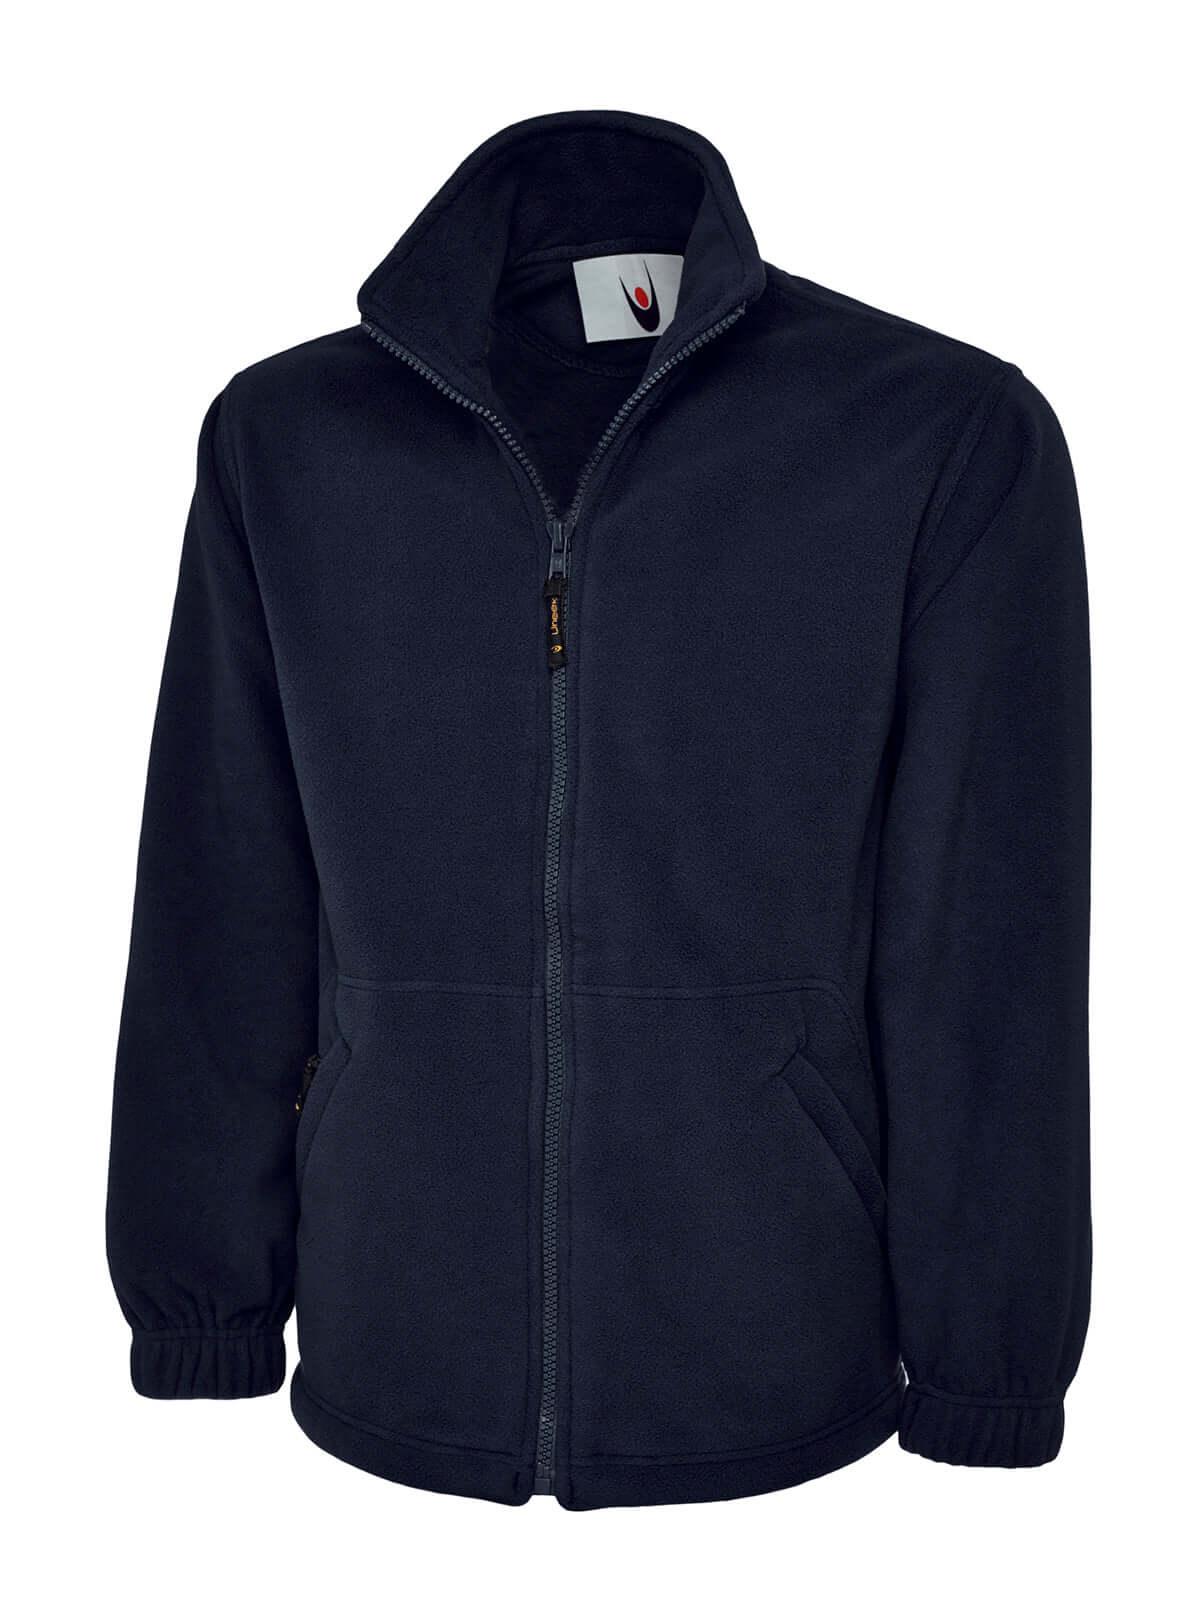 Pegasus Uniform Premium Full Zip Micro Fleece Jacket - Navy Blue